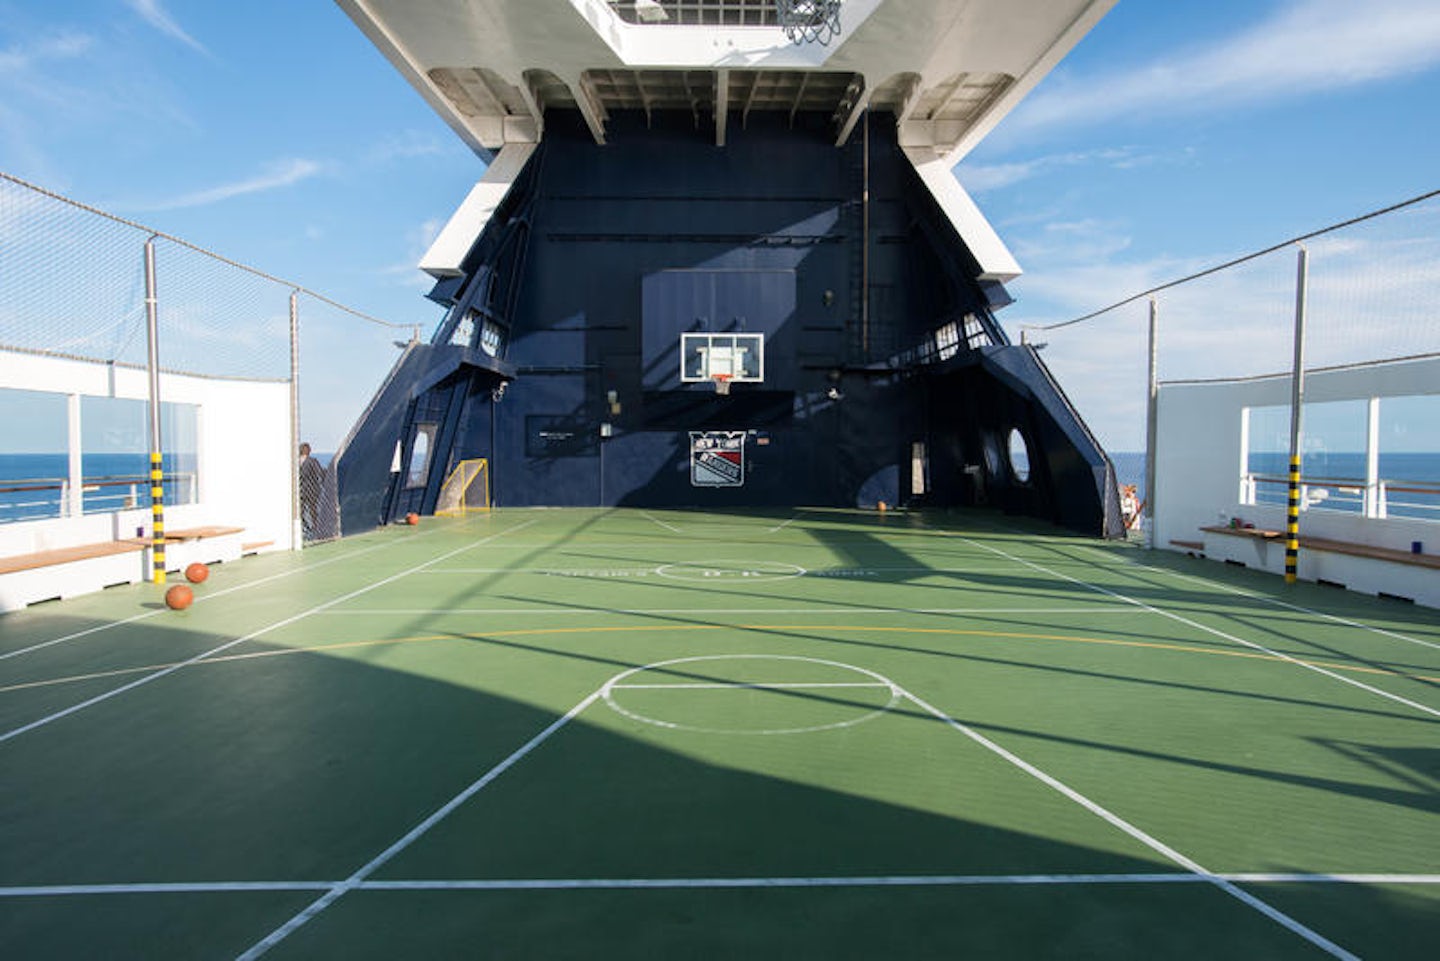 Basketball Court on Celebrity Summit